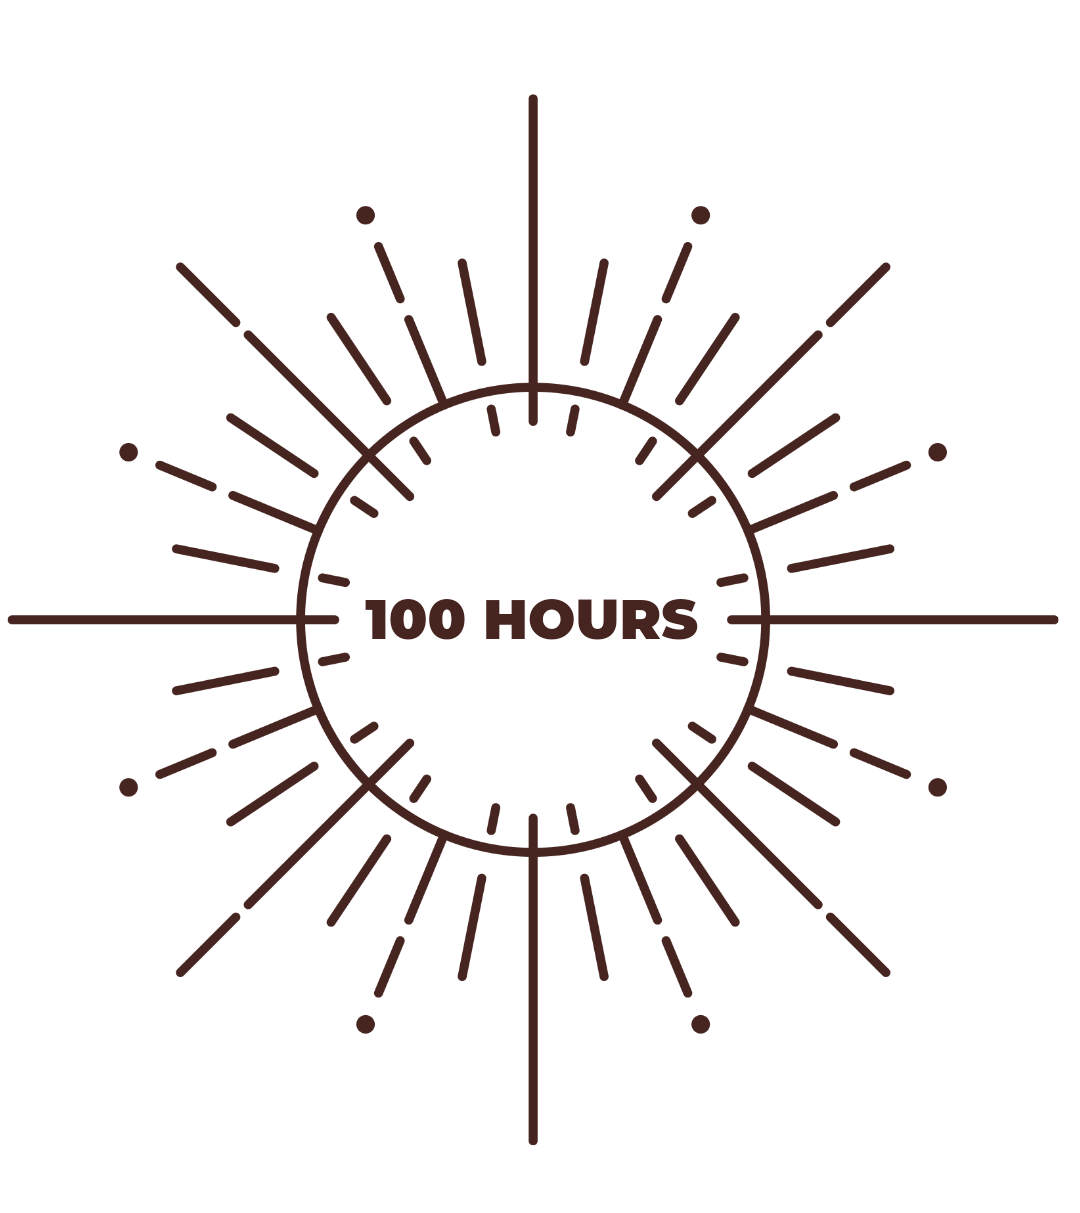 100 hours fundamental yoga course in goa